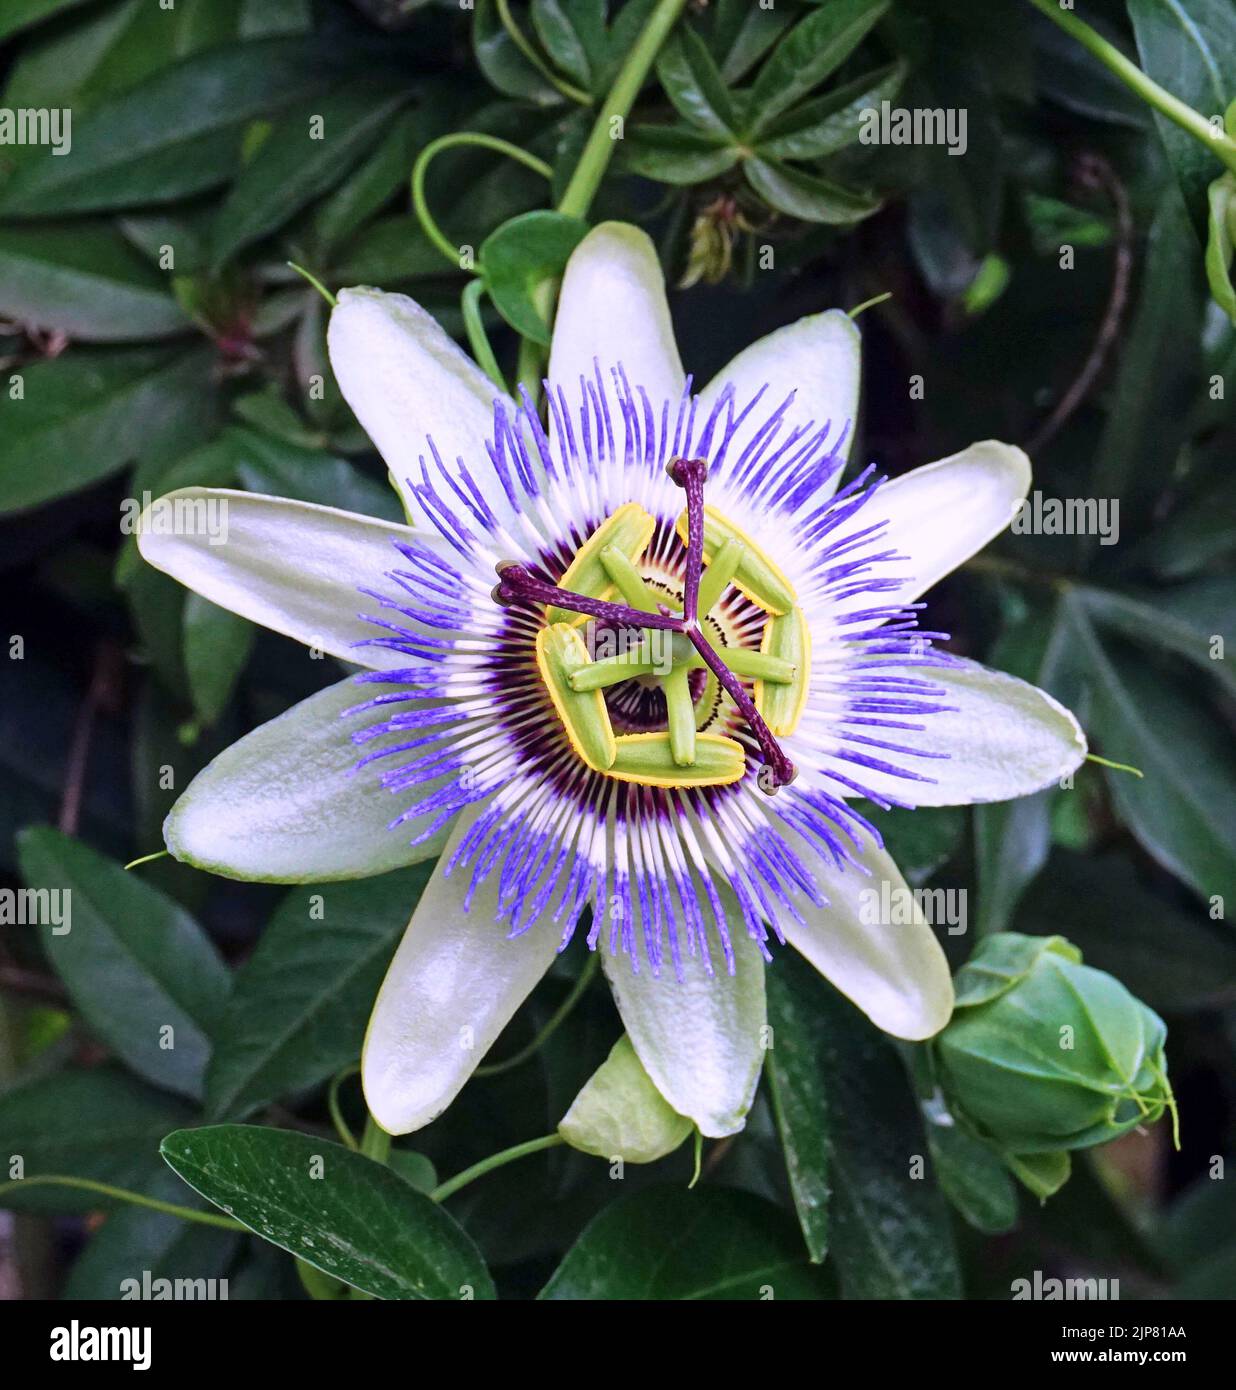 Passion flower;flowering plant in the genus of Passiflora. Stock Photo